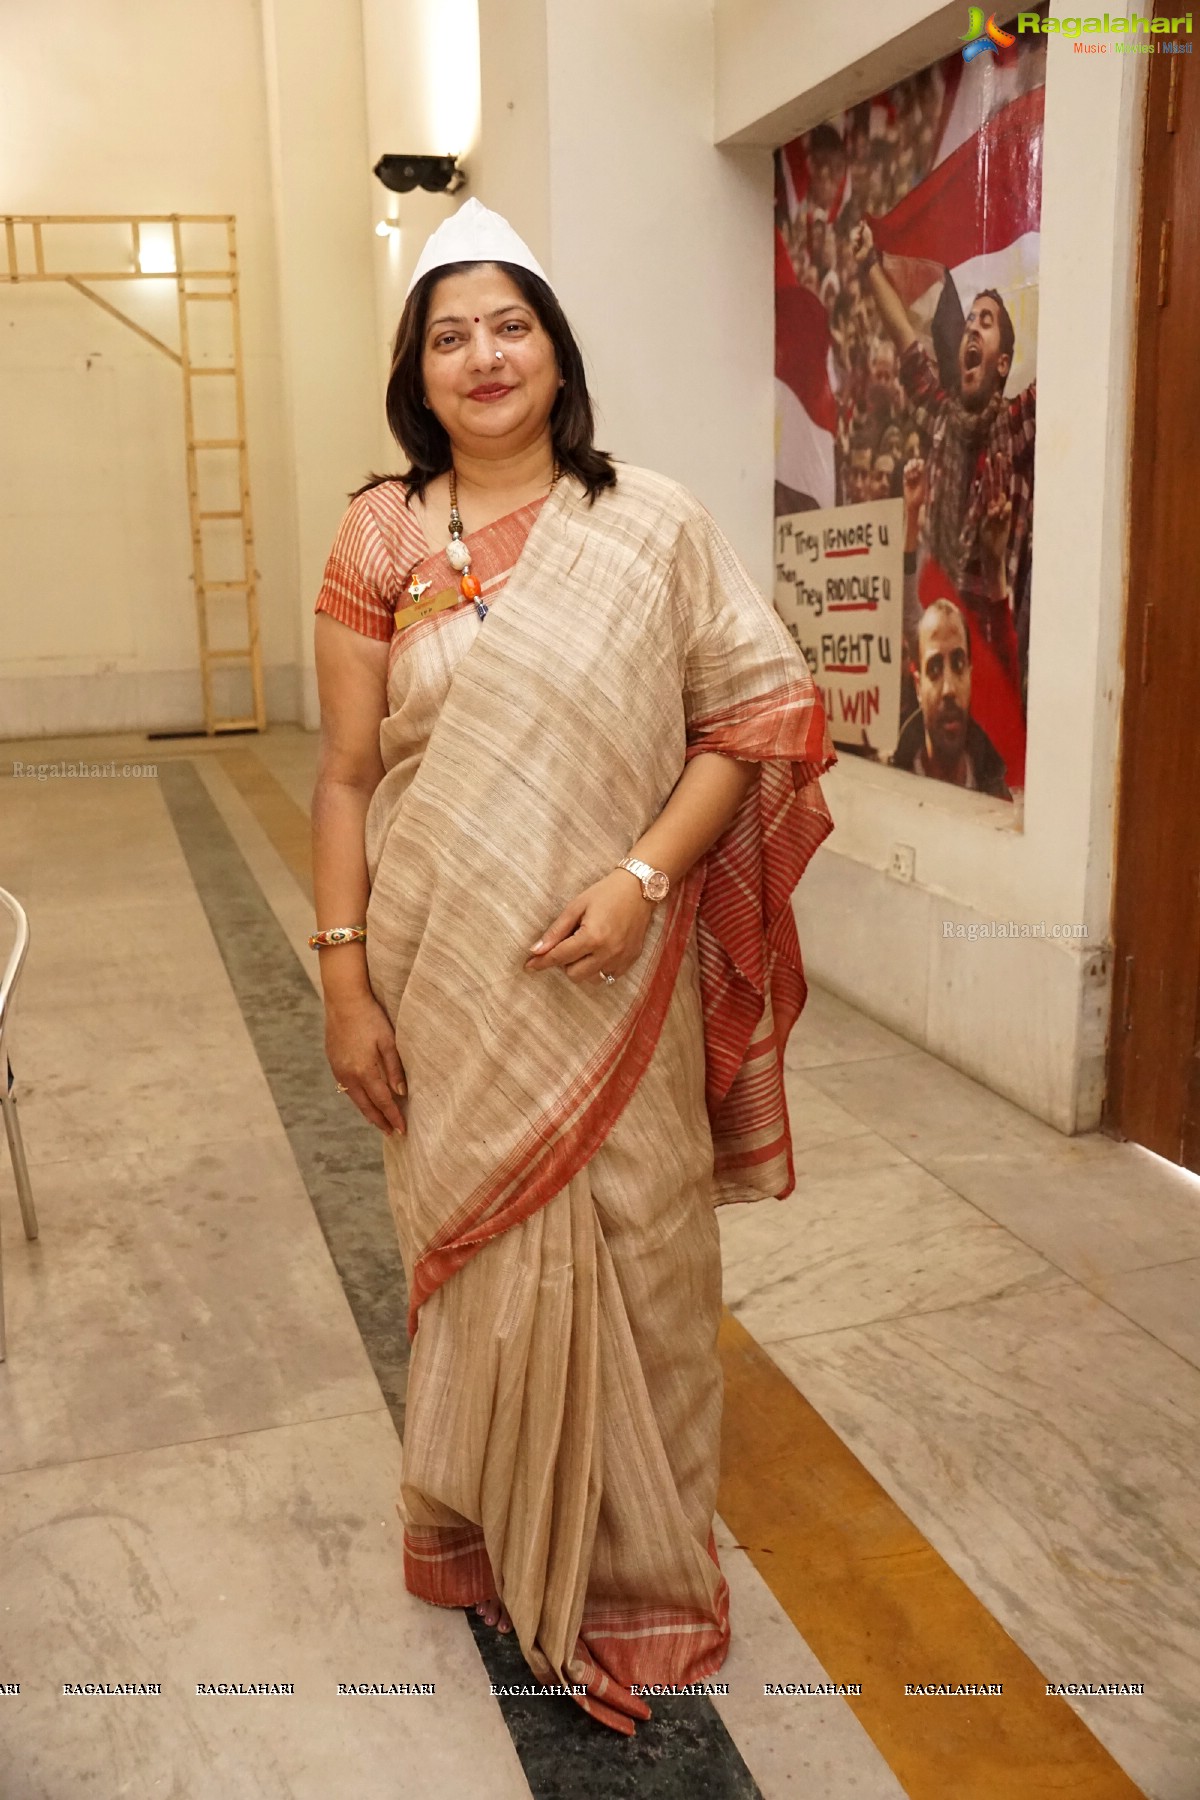 I am Gandhi - An Interactive Program by Sanskruti Ladies Club at Mahatma Gandhi Digital Museum